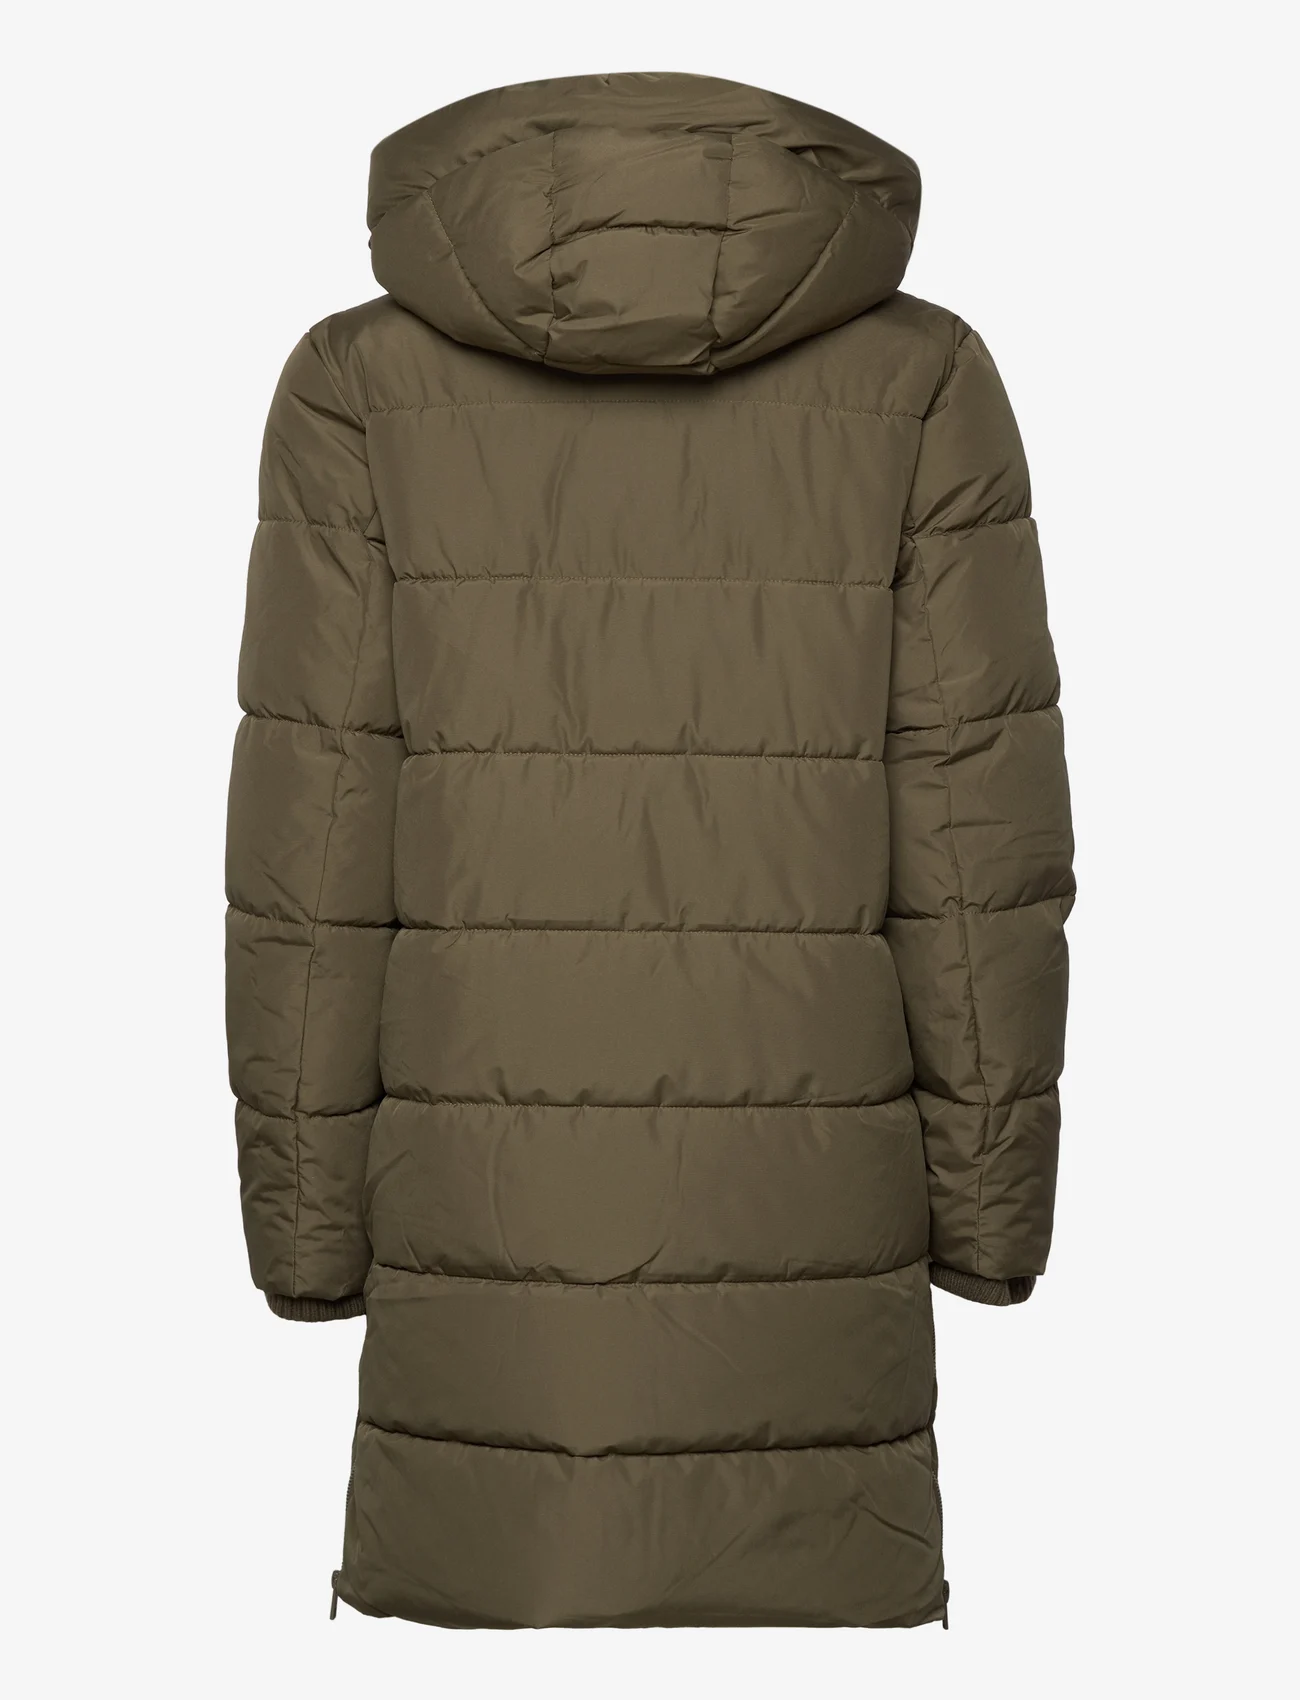 Esprit Casual - Quilted coat with rib knit details - winterjacken - dark khaki - 1